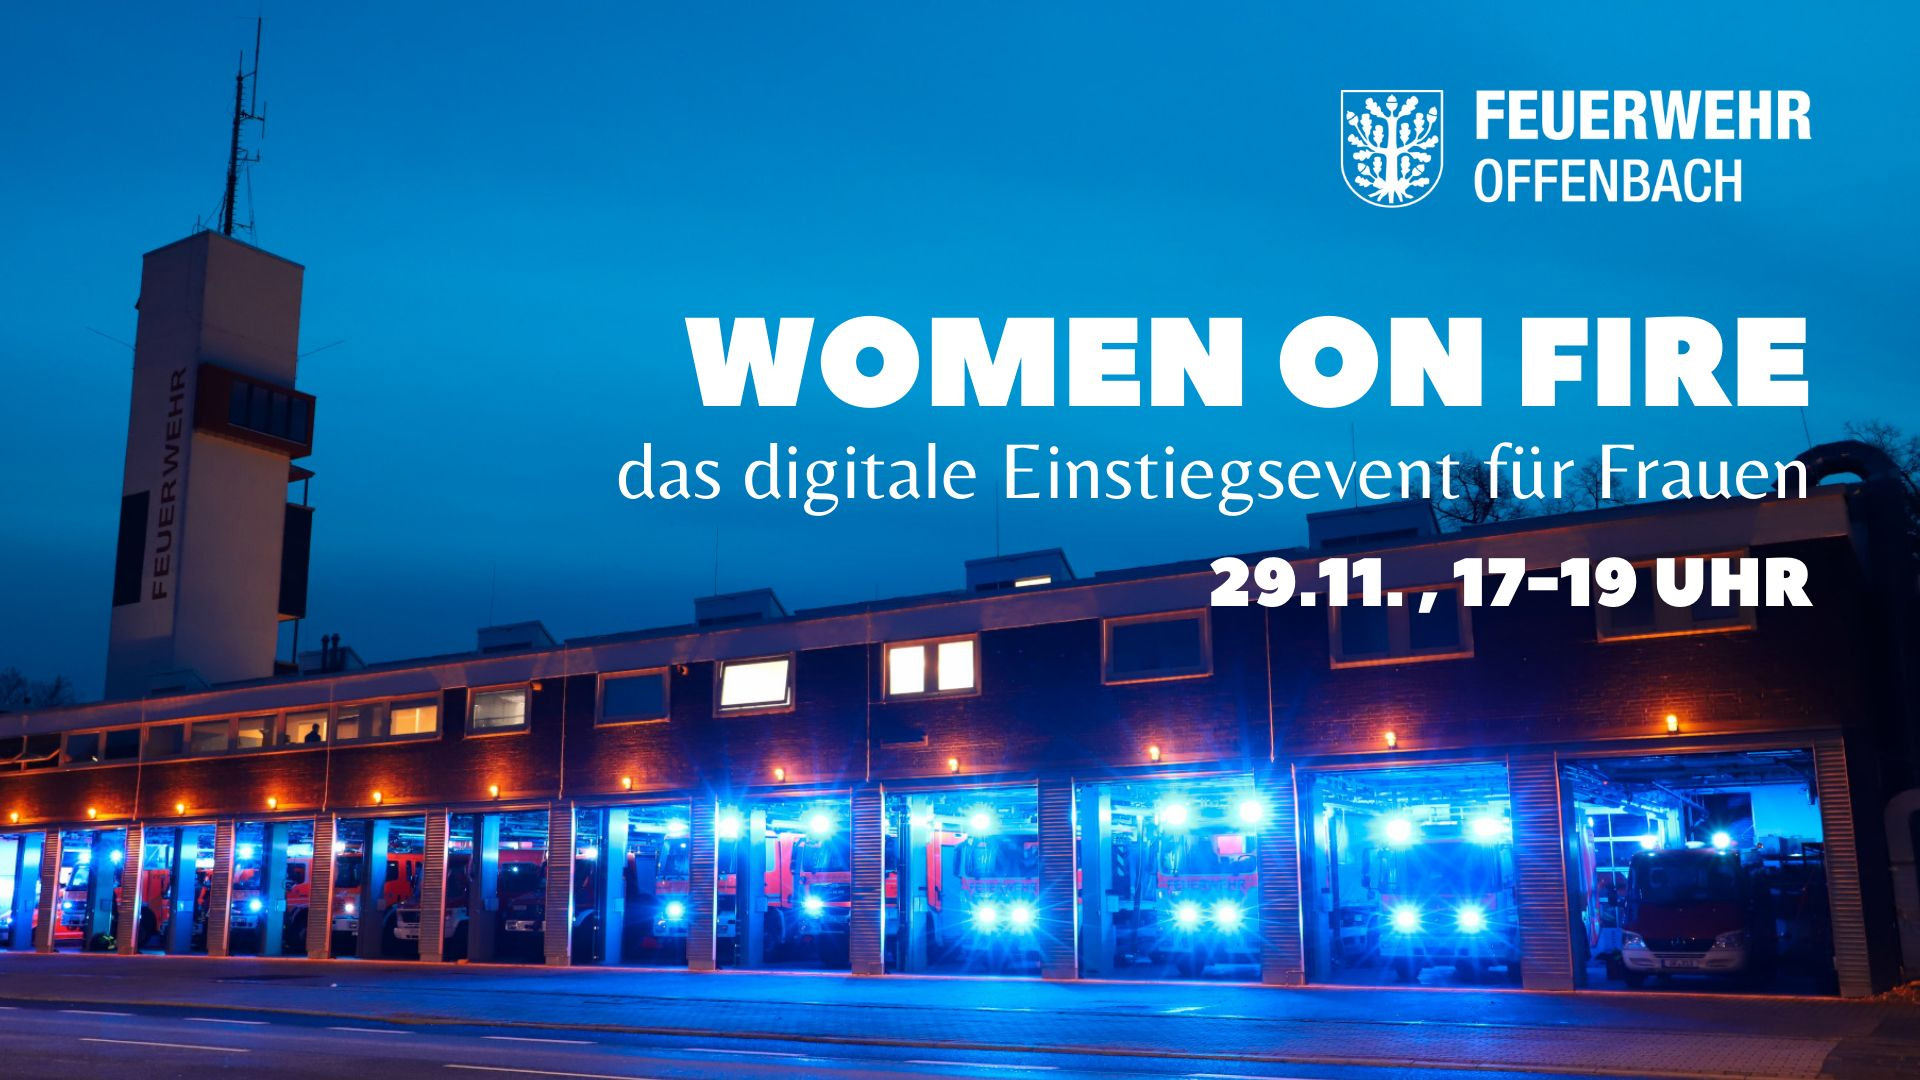 Feuerwehr Offenbach Women on fire